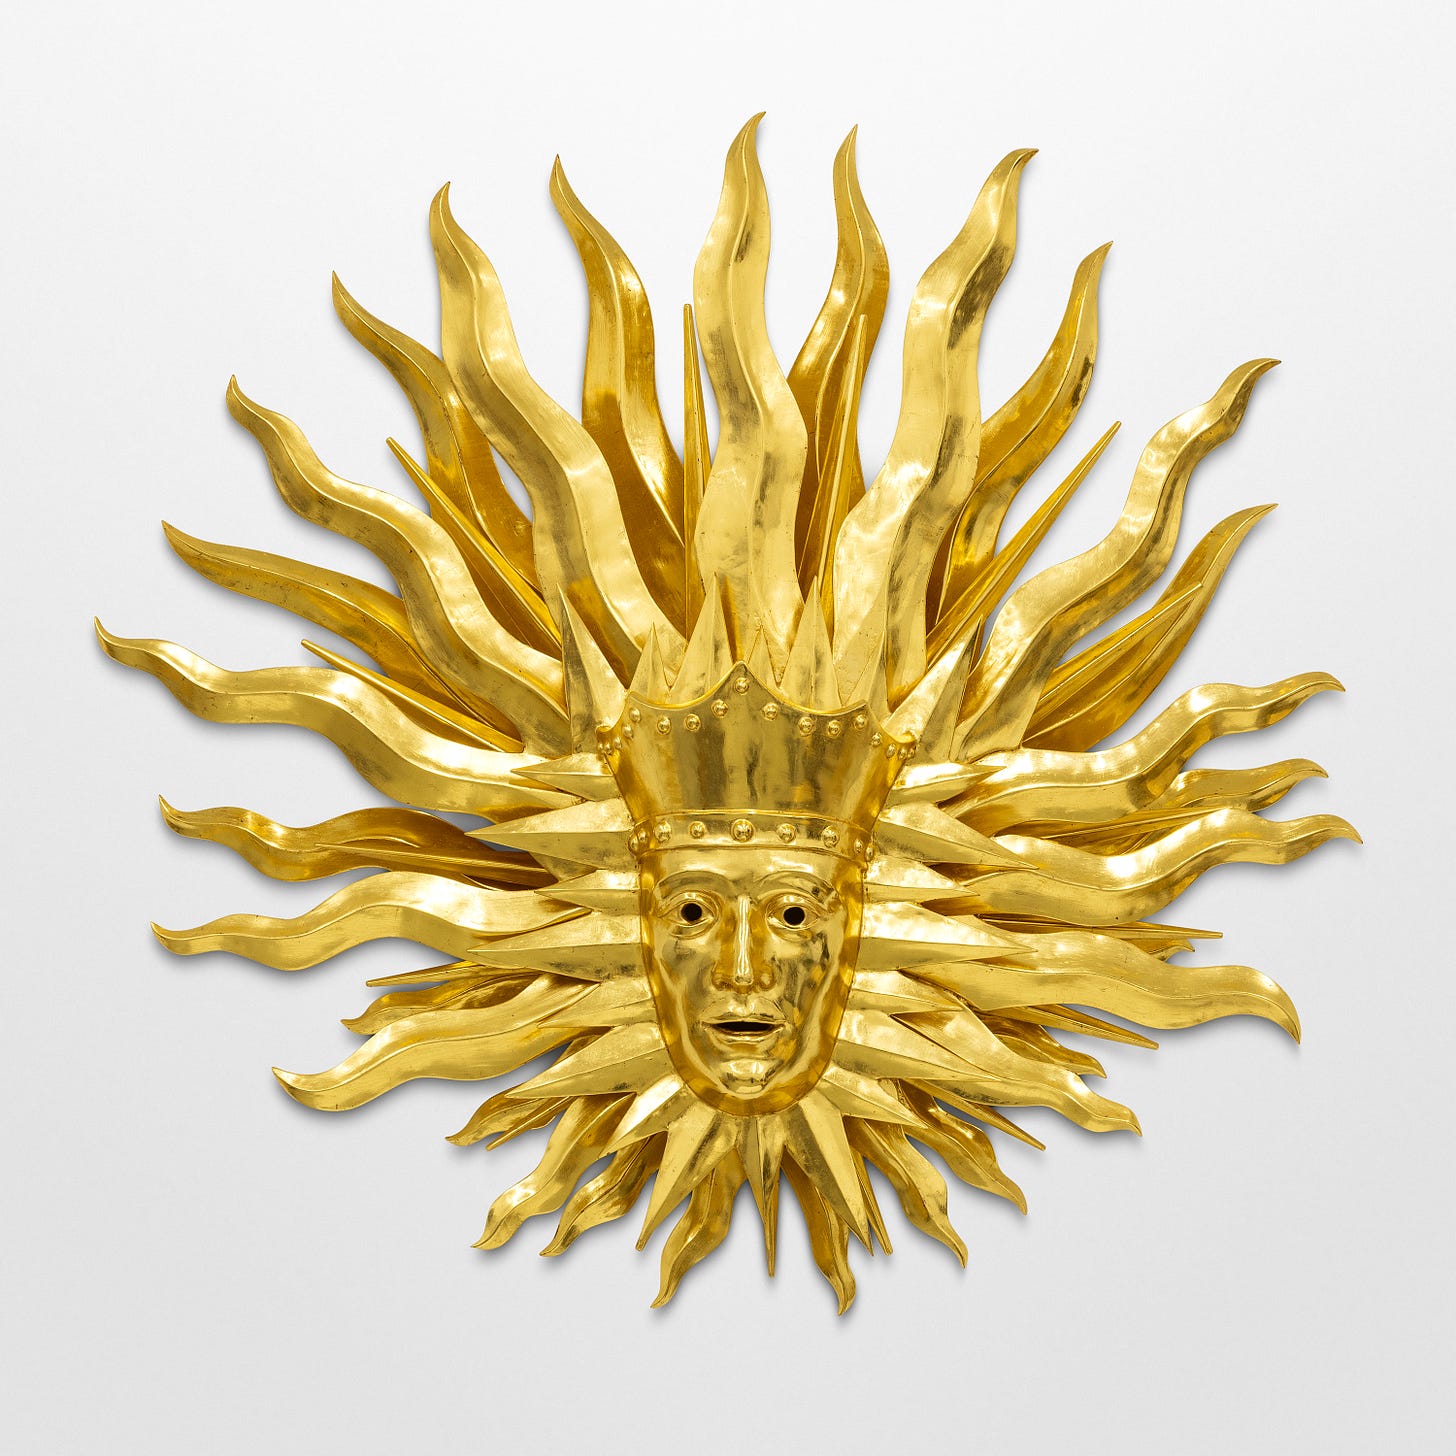 Sun mask | based on "the prodigal son"